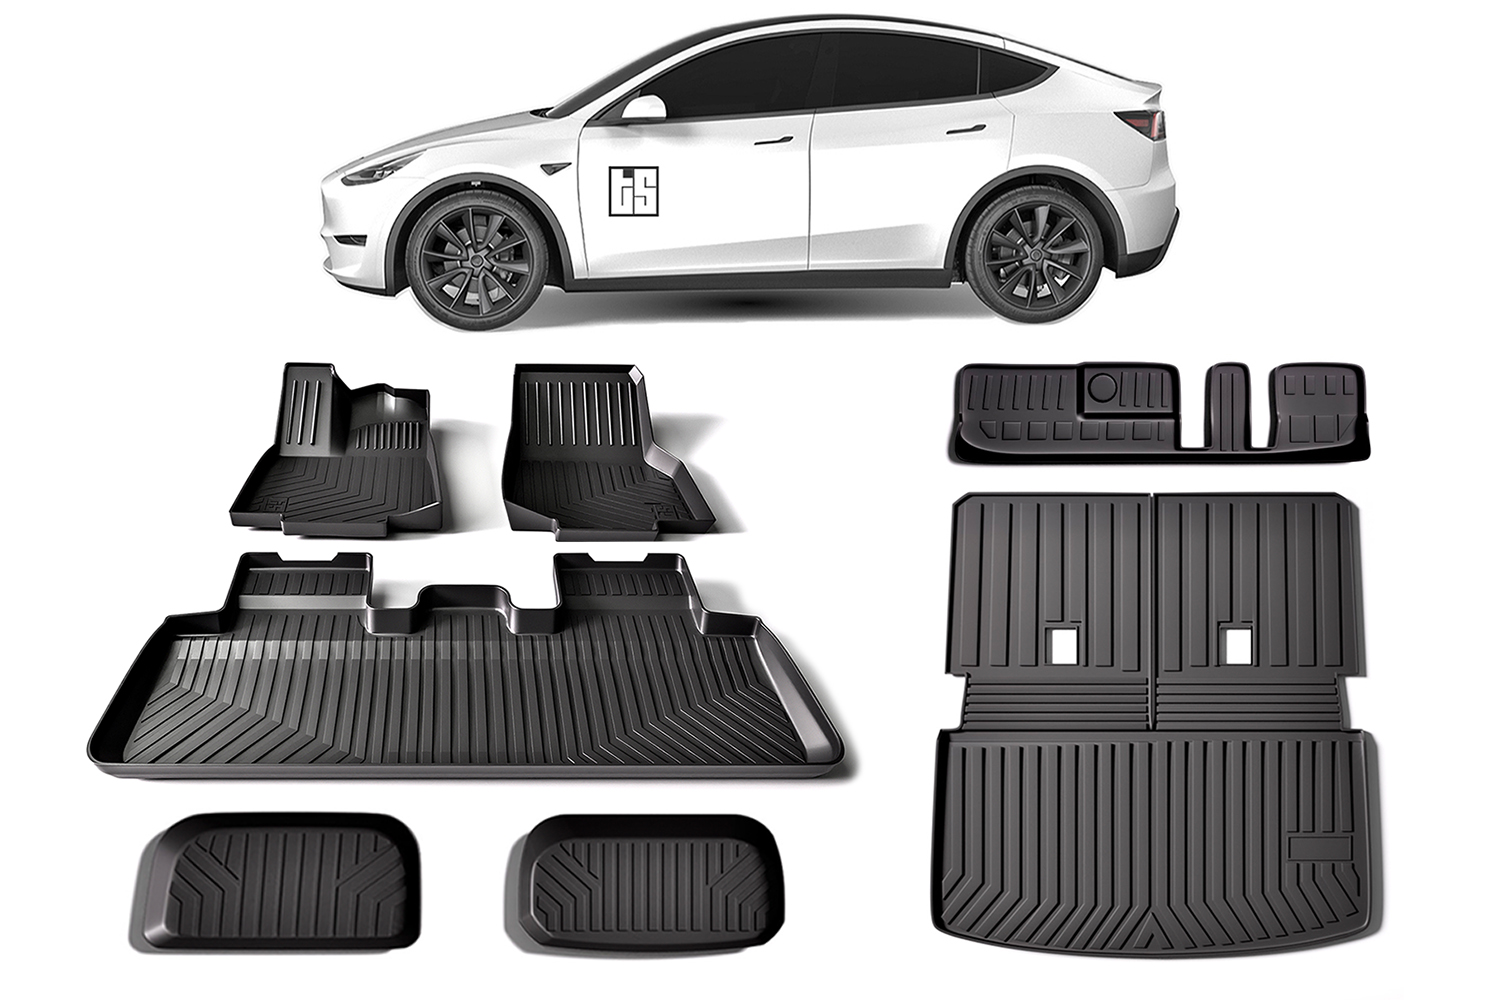 New Tesla Model Y Floor Mats by Tesloid provide the best 3D